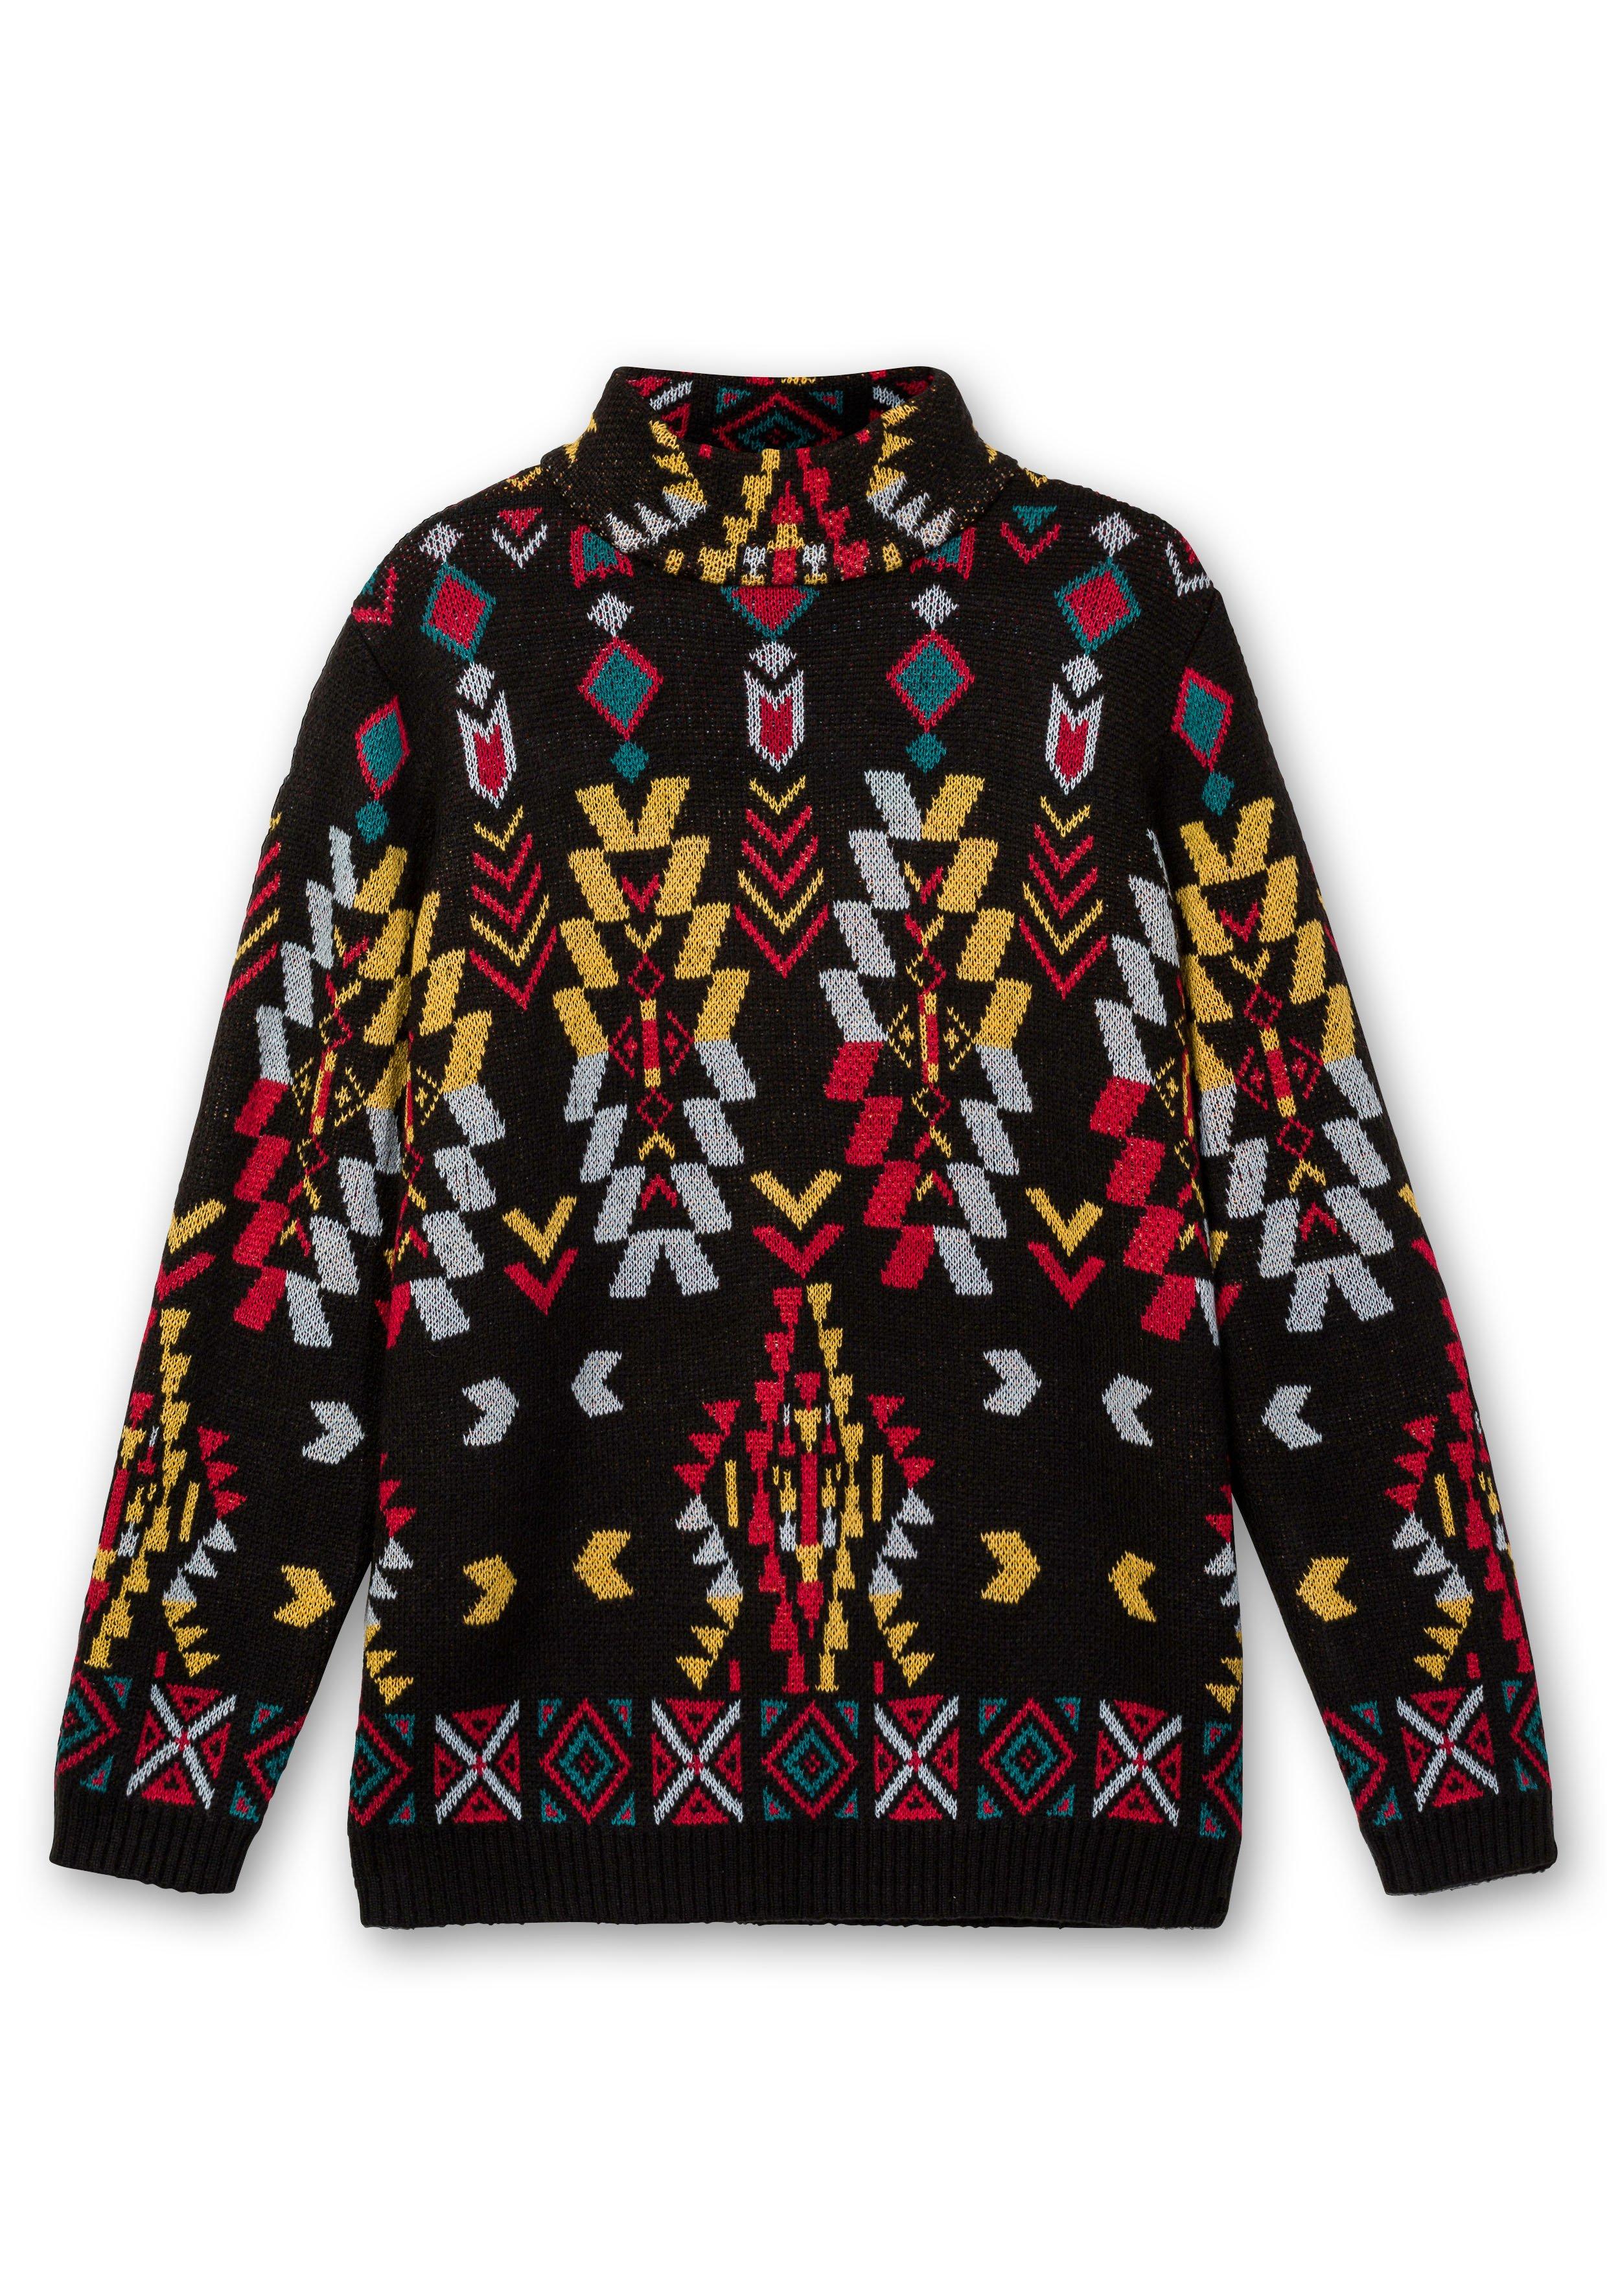 Pullover mit Jacquardmuster im Ethno-Stil gemustert | schwarz sheego 